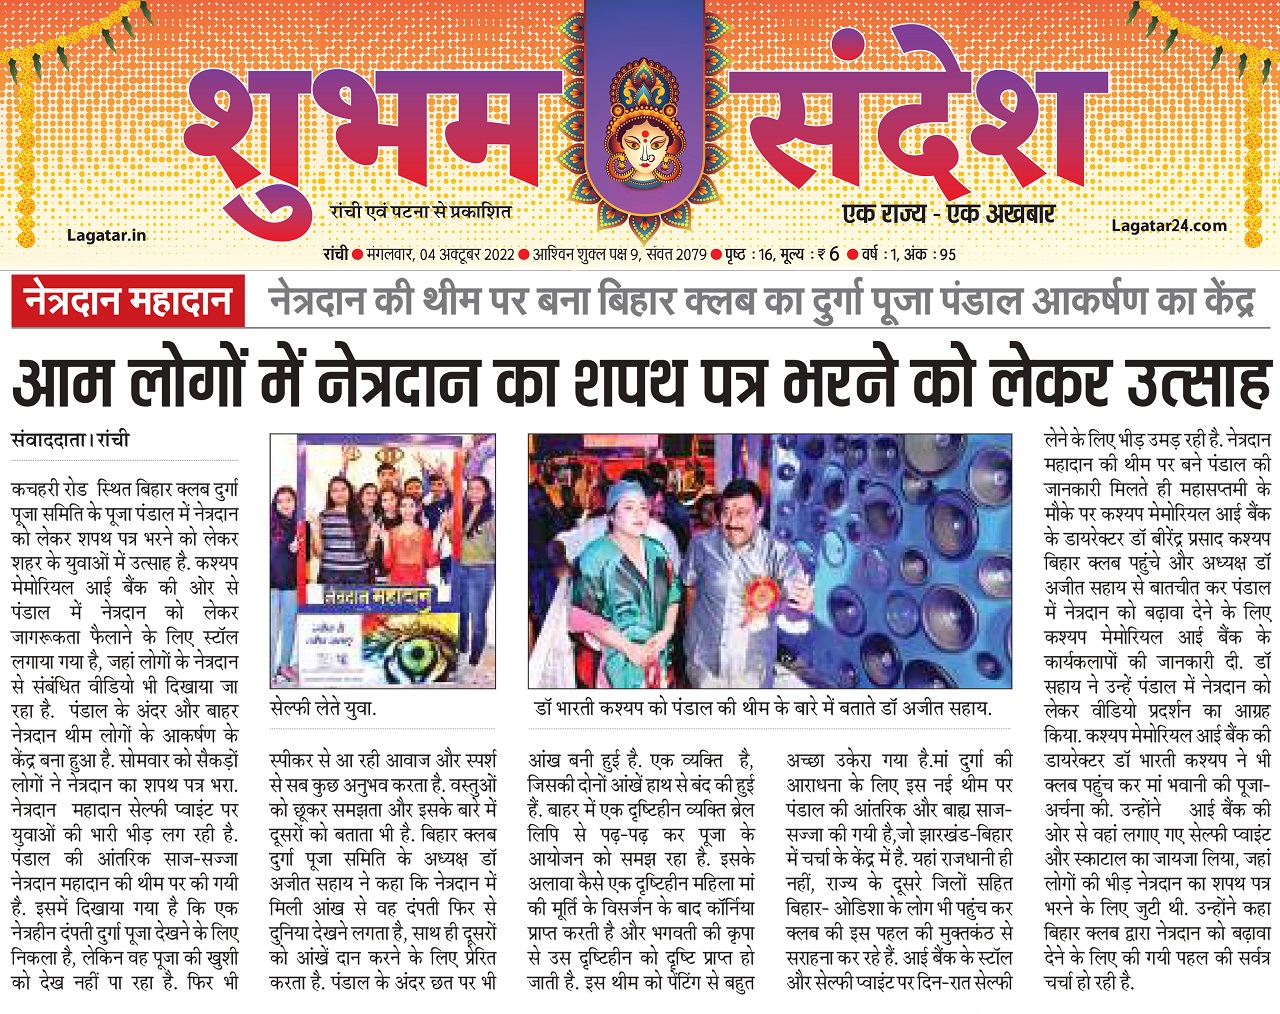 Dr. Bharti Kashyap: Durga puja 2022 celebration with Divinity of Eye Donation